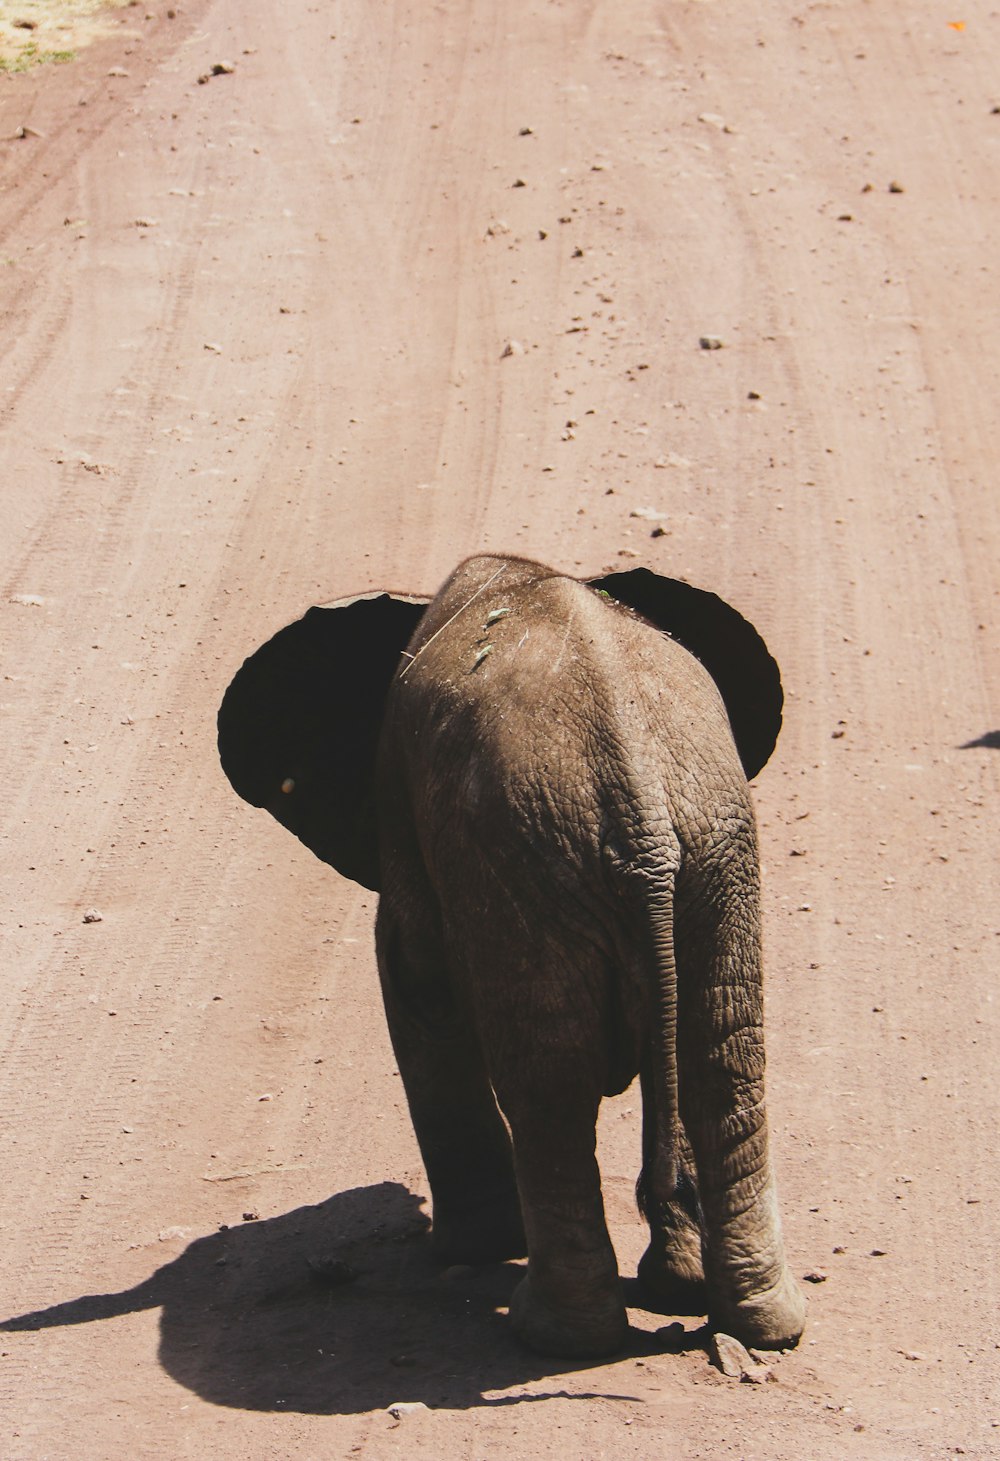 a baby elephant walking across a dirt road